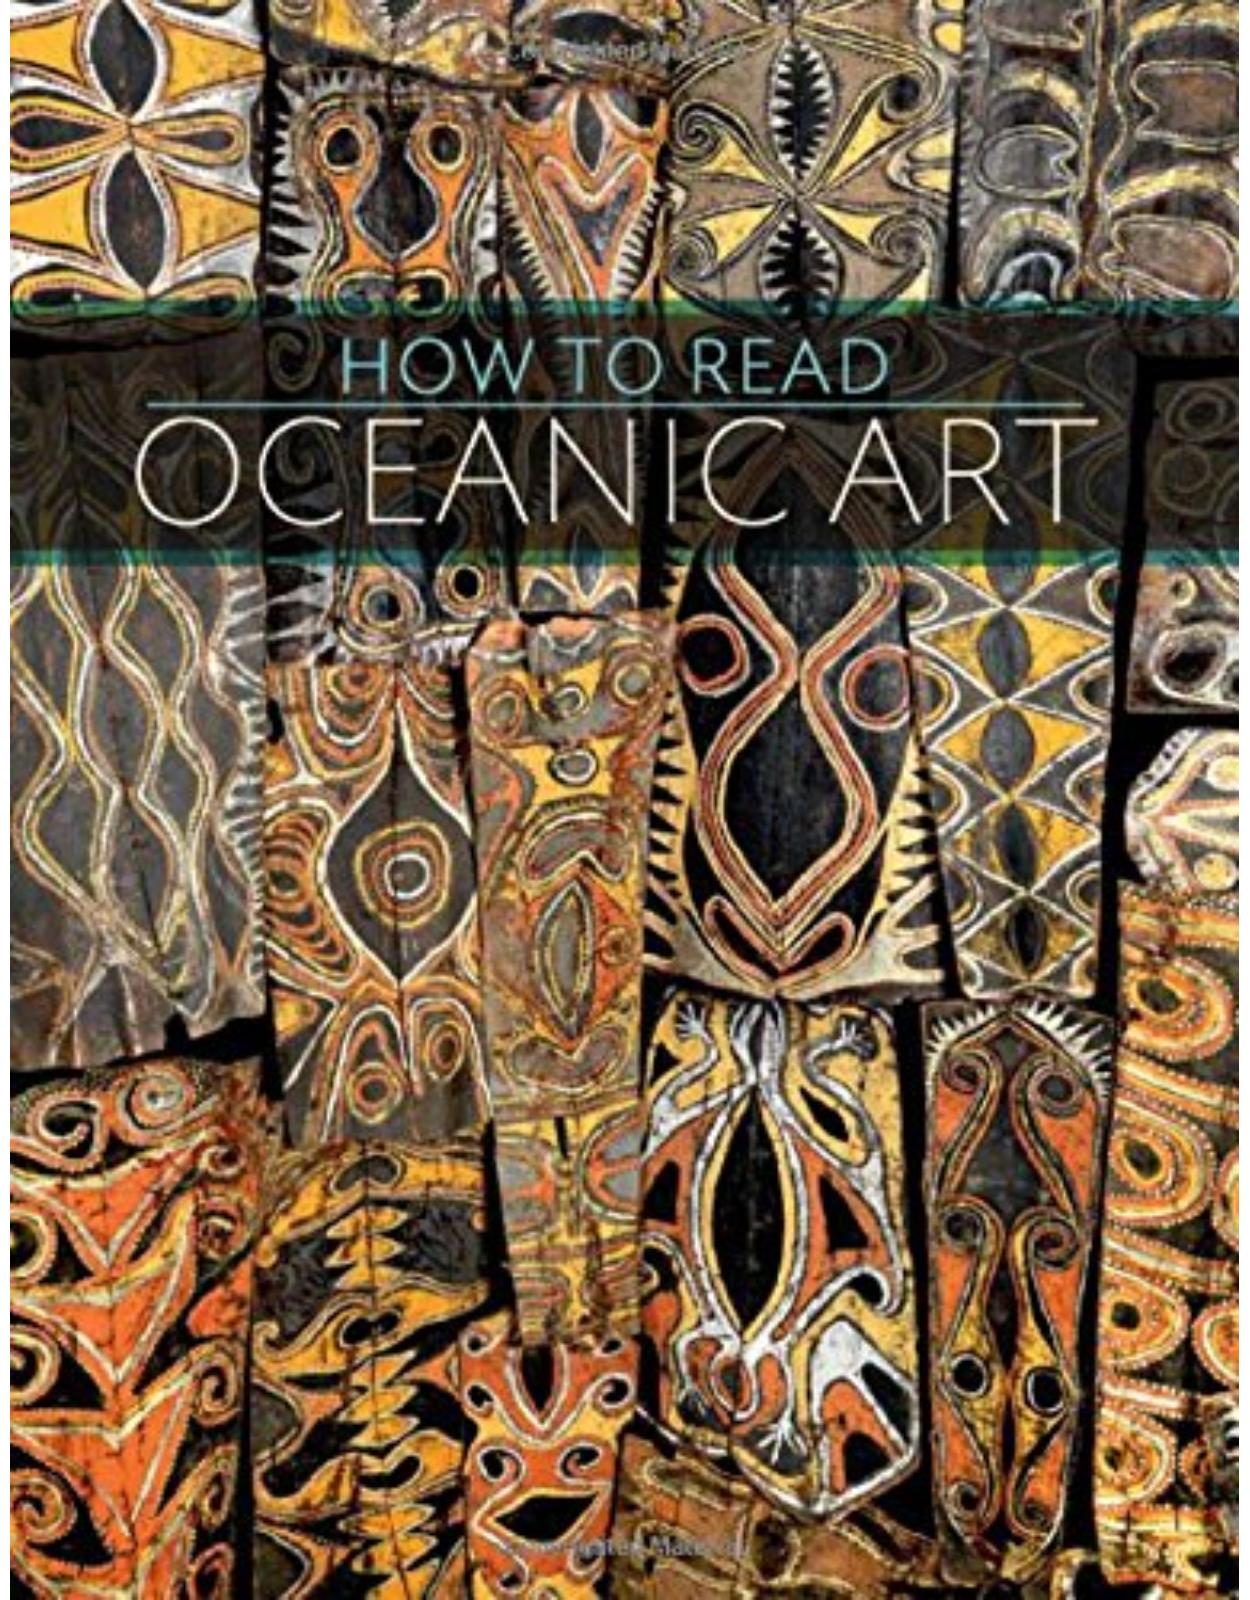 How to Read Oceanic Art.